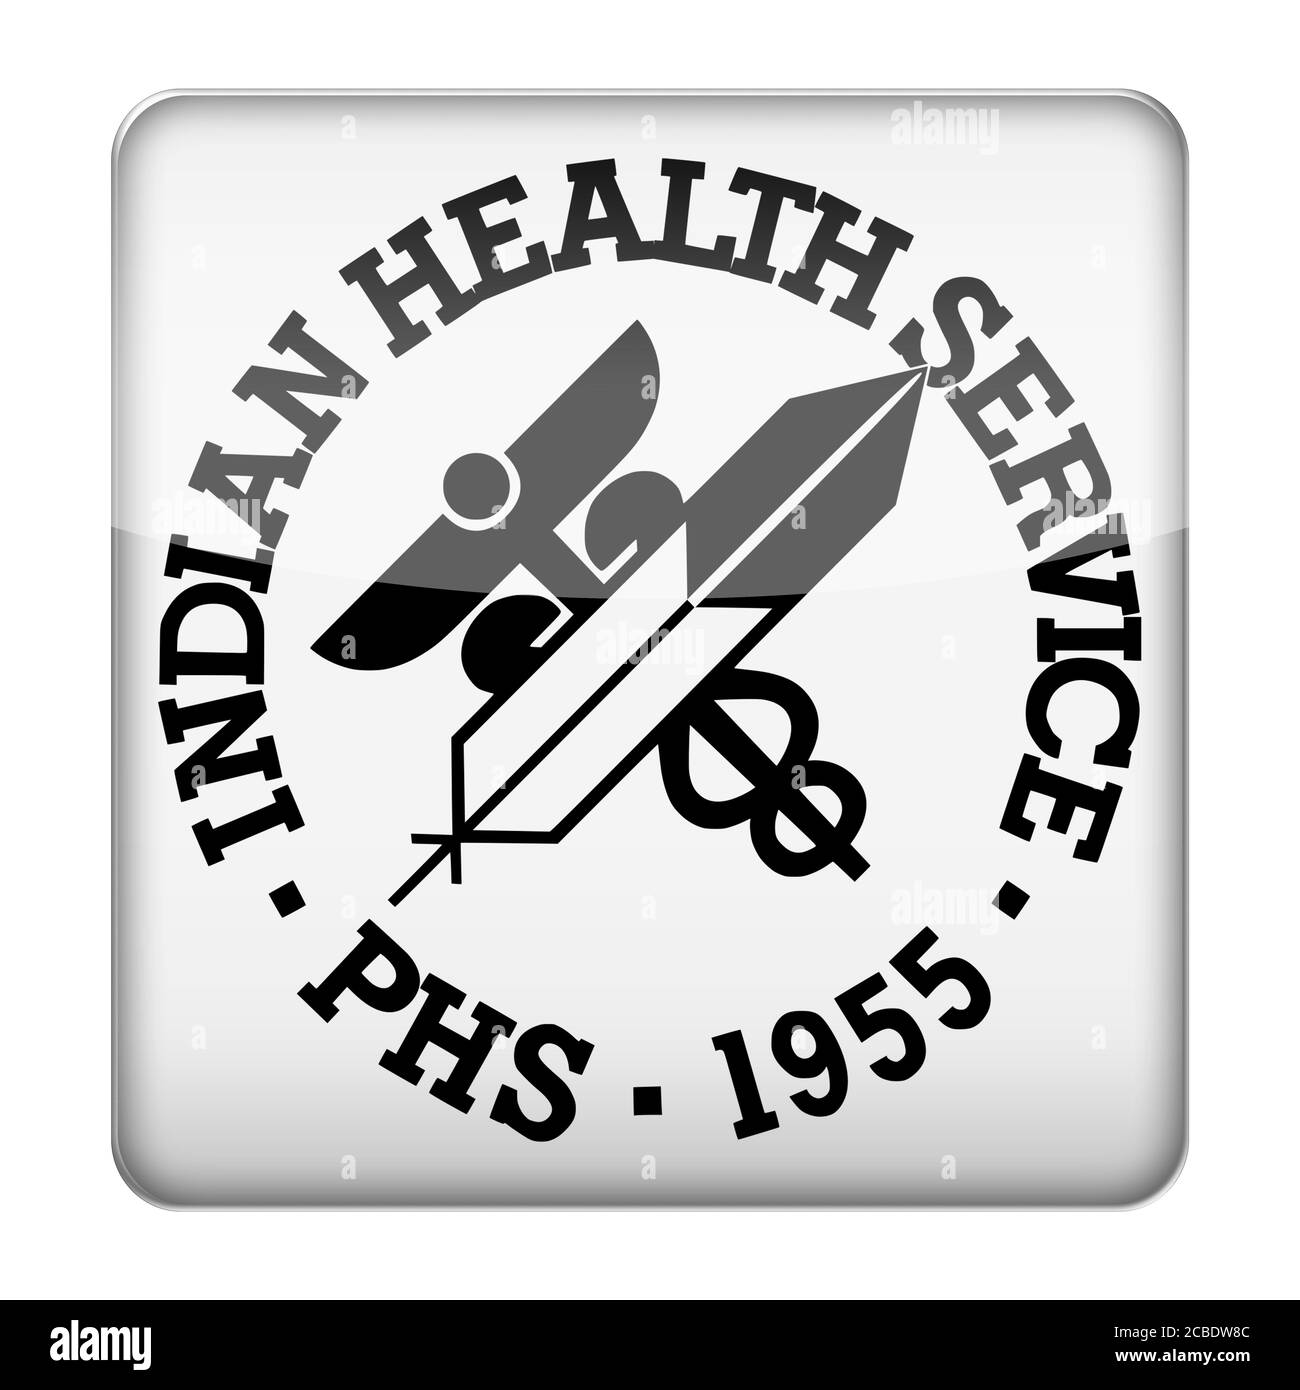 Indian Health Service logo Stock Photo